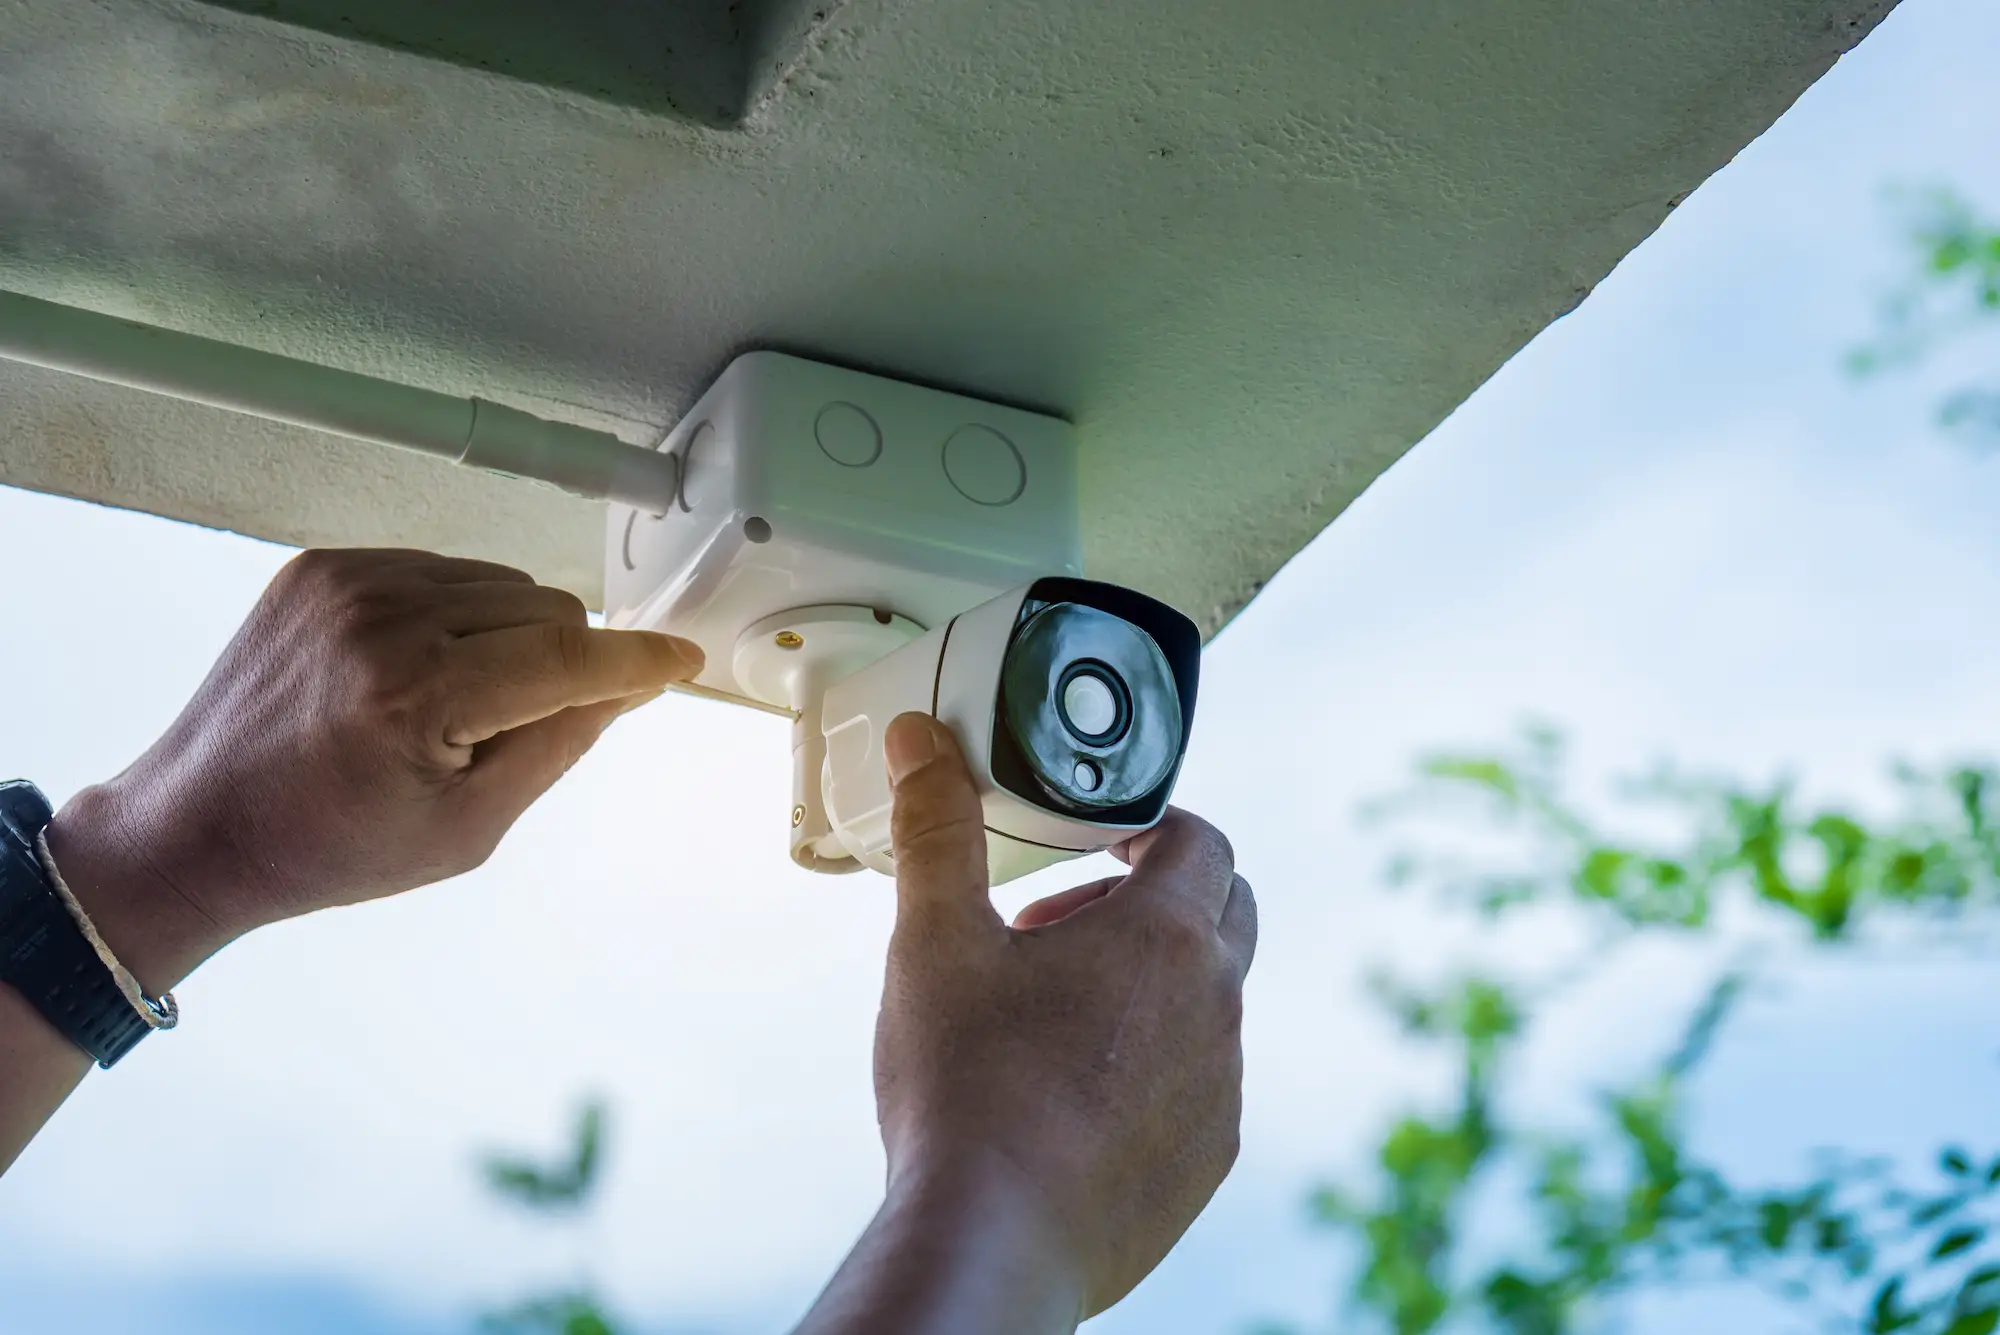 diy installing a home security camera. diy installing a home security camer...